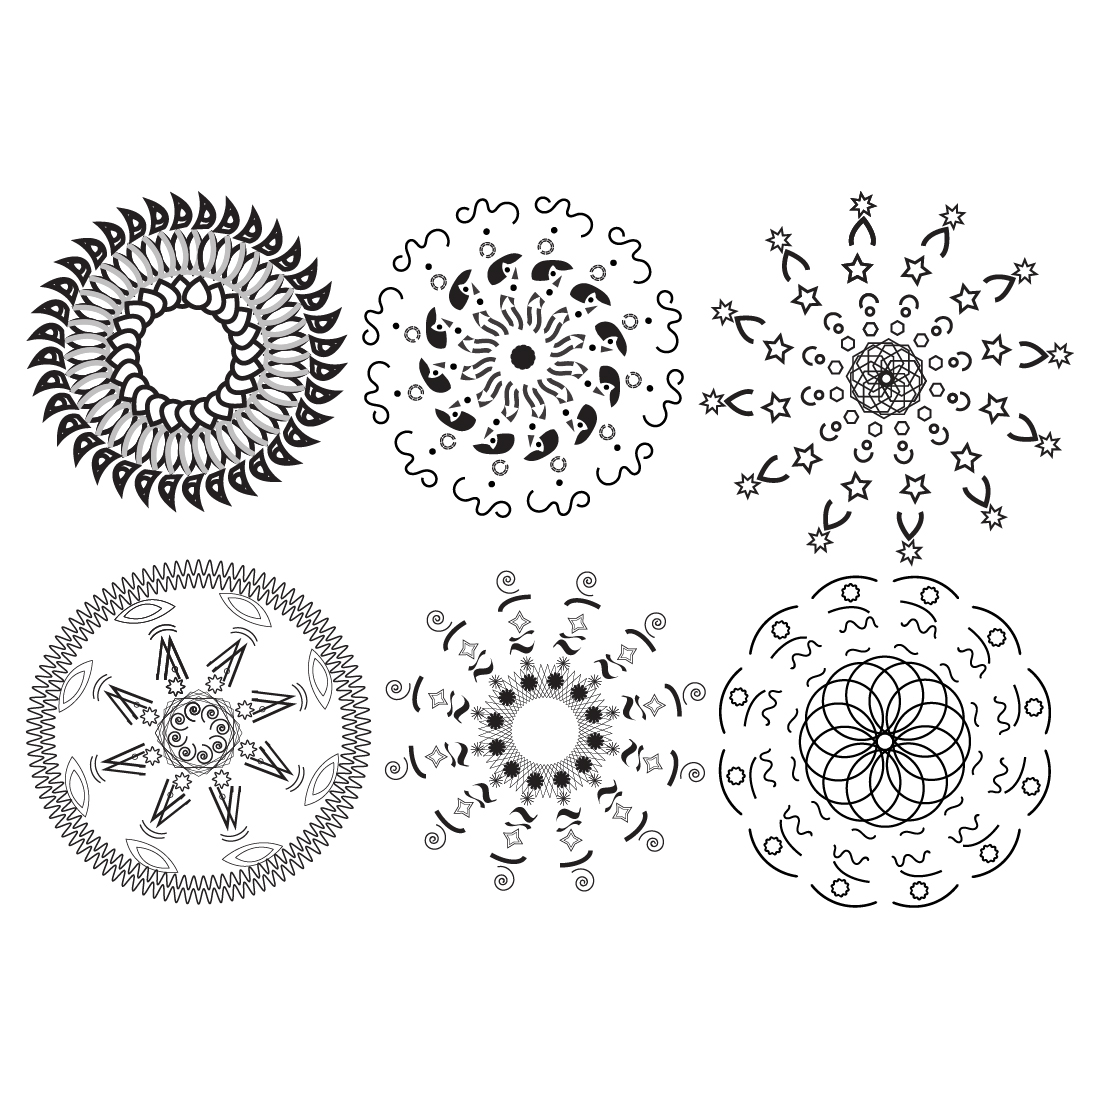 Elegant Mandala Art Design cover image.